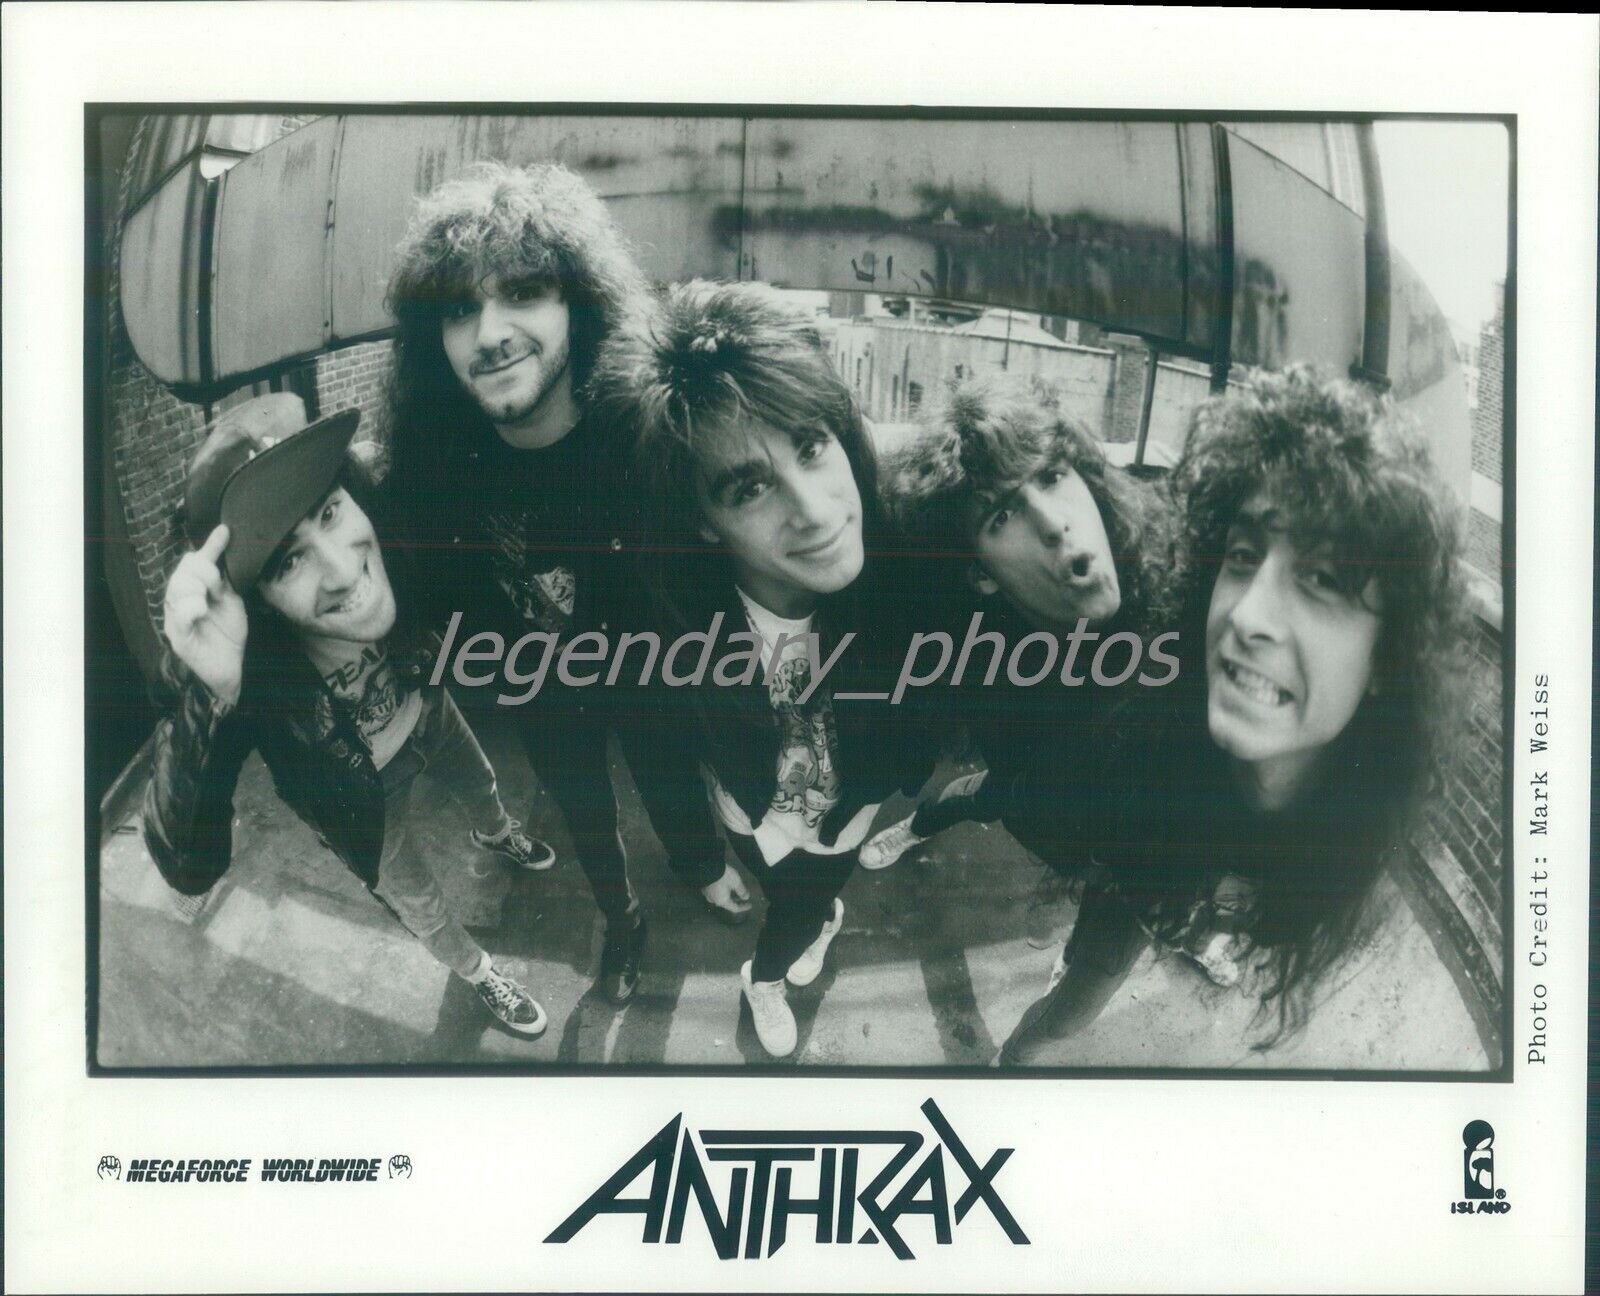 1980s Portrait of Heavy Metal Band Anthrax Original News Service Photo